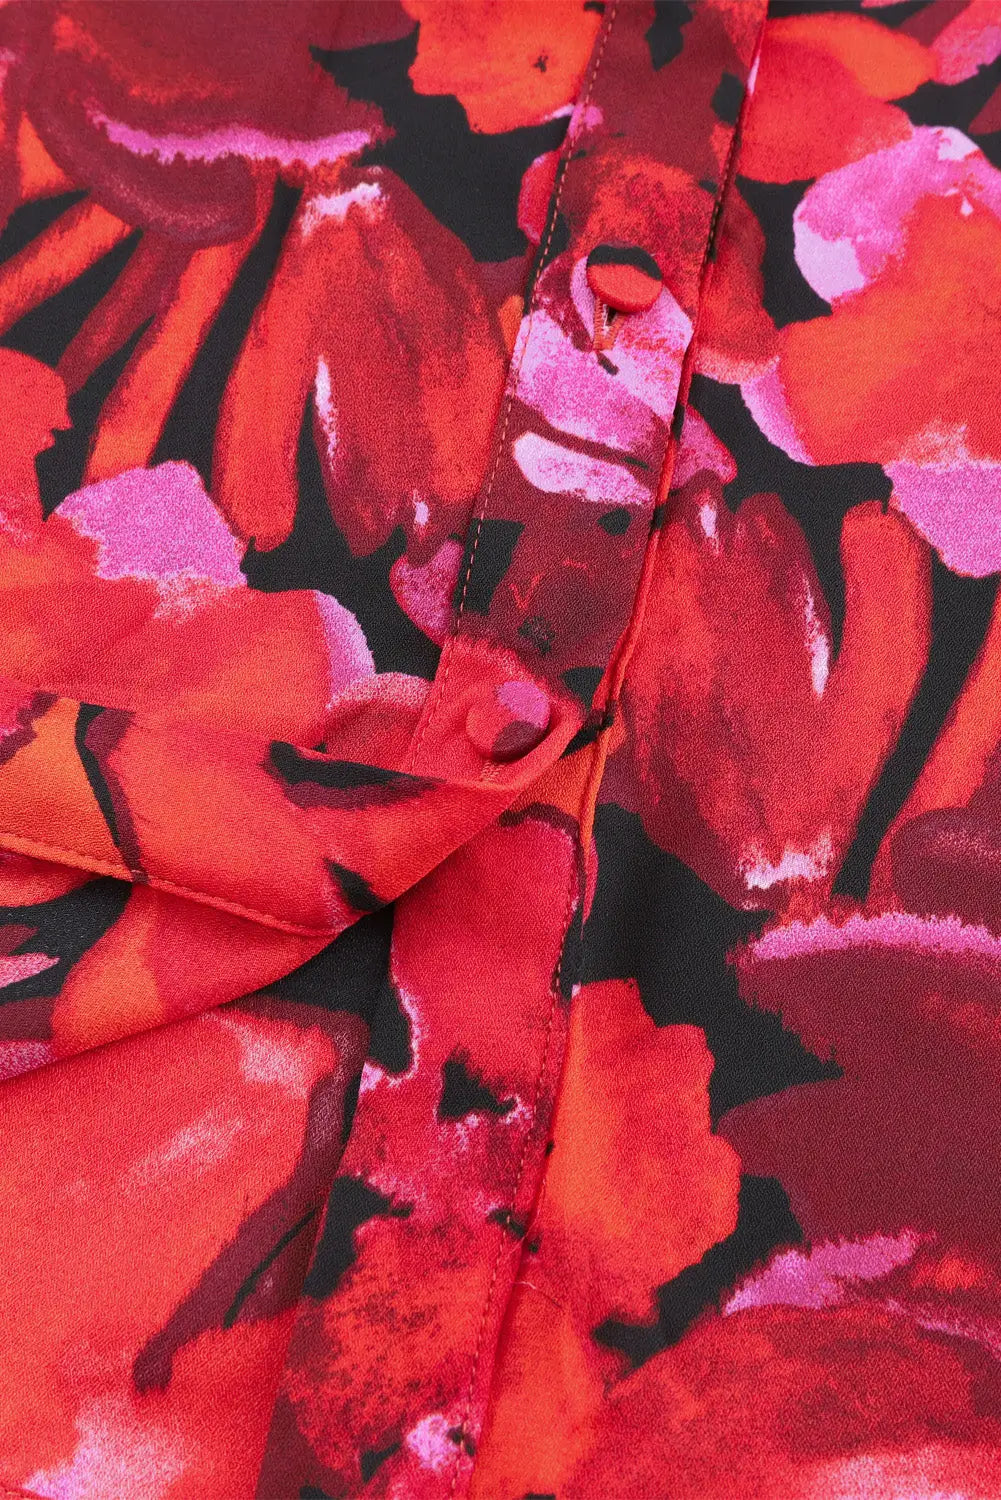 Red floral print lantern sleeve shirt - tops